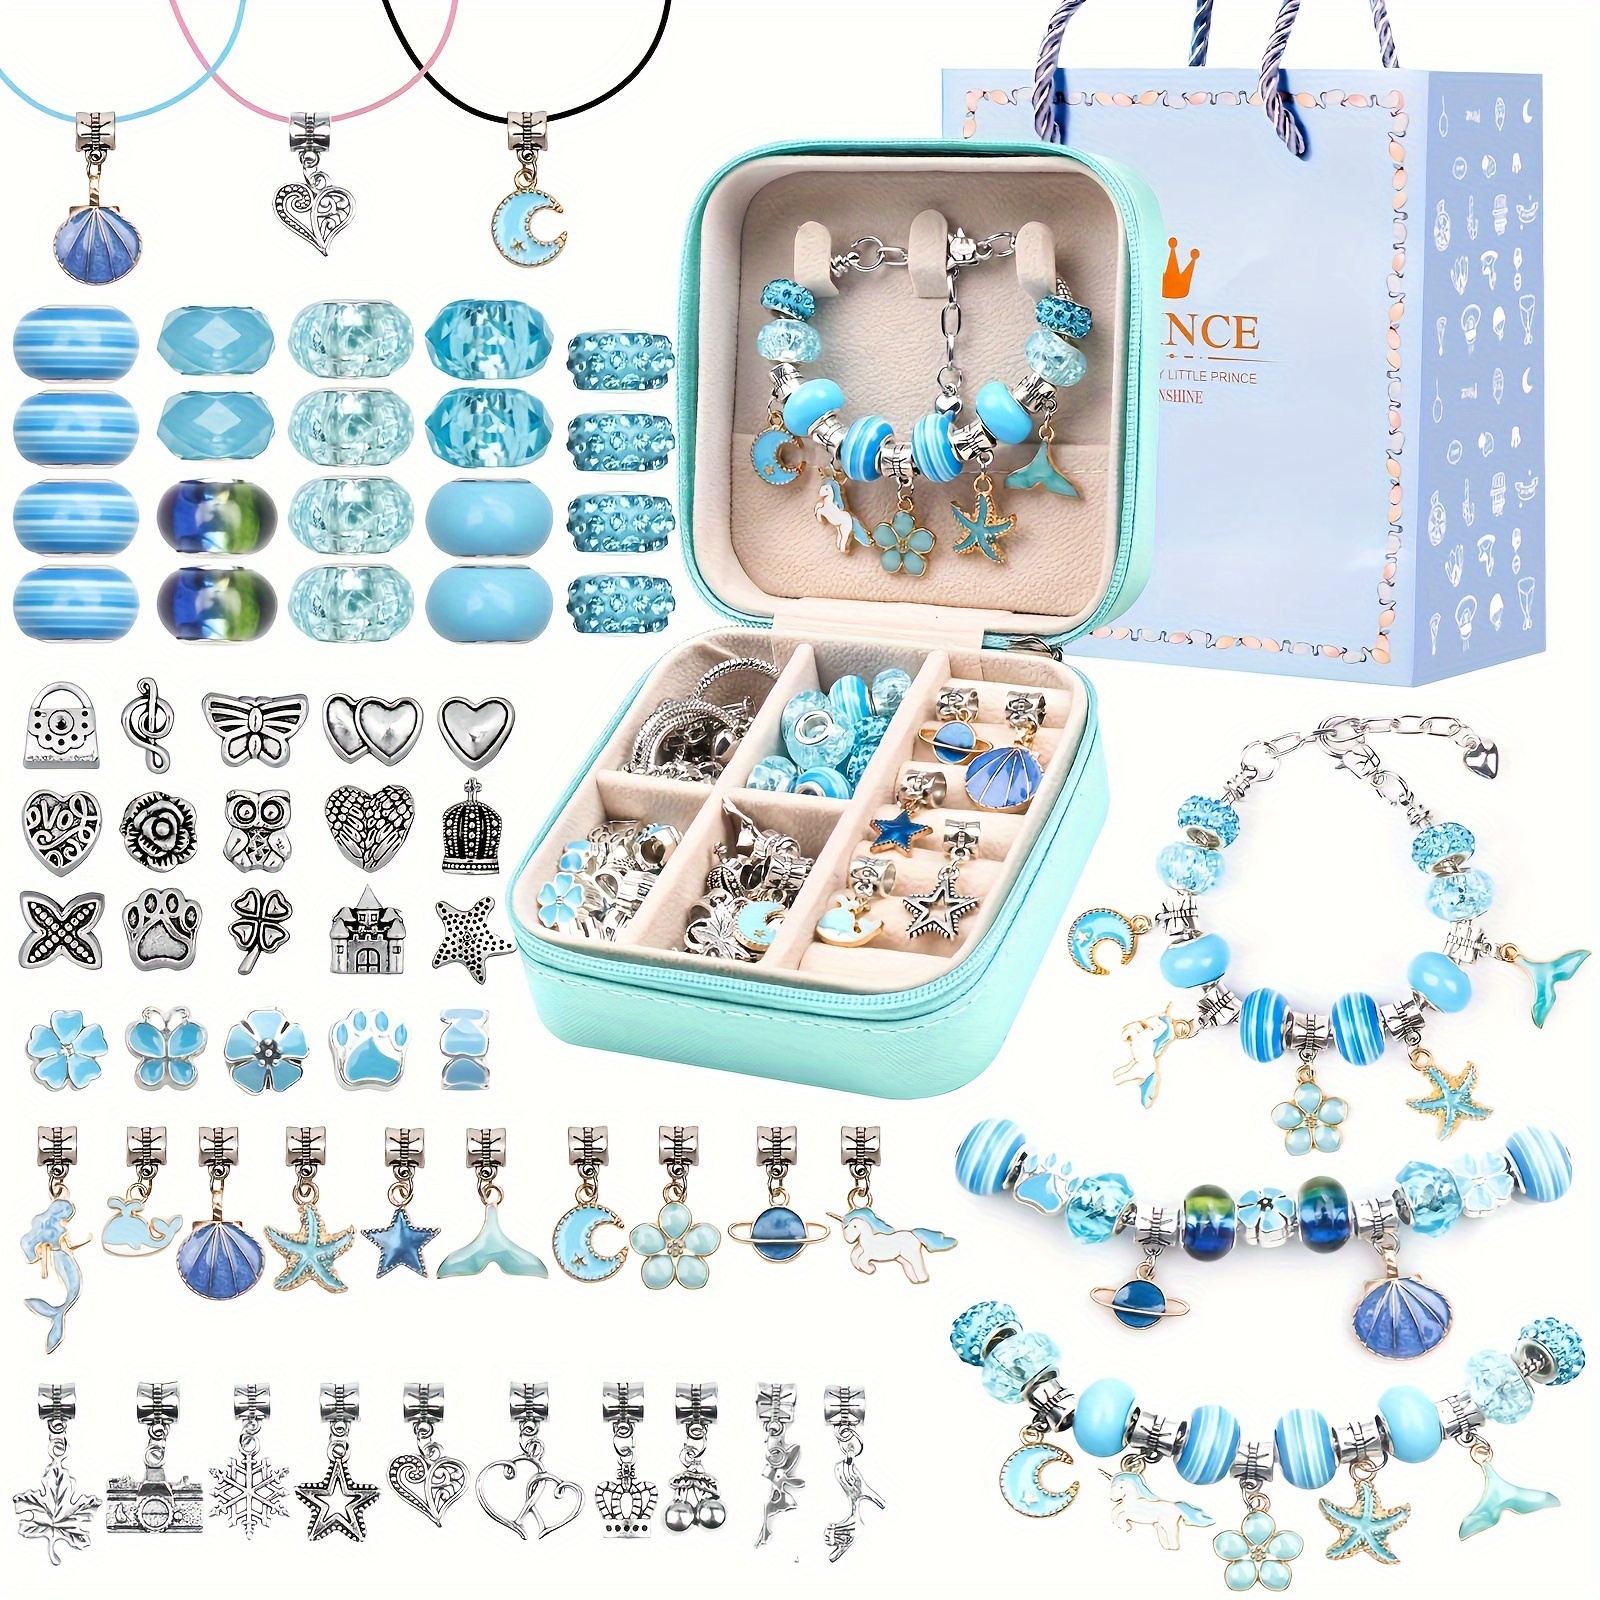 Lezmarket 208 Pcs Charm Bracelet Making Kit for Girls, Unicorn Mermaid  Crafts Gifts Set, Charm Bracelets Jewelry Making Kit for 8-12 Age Girl